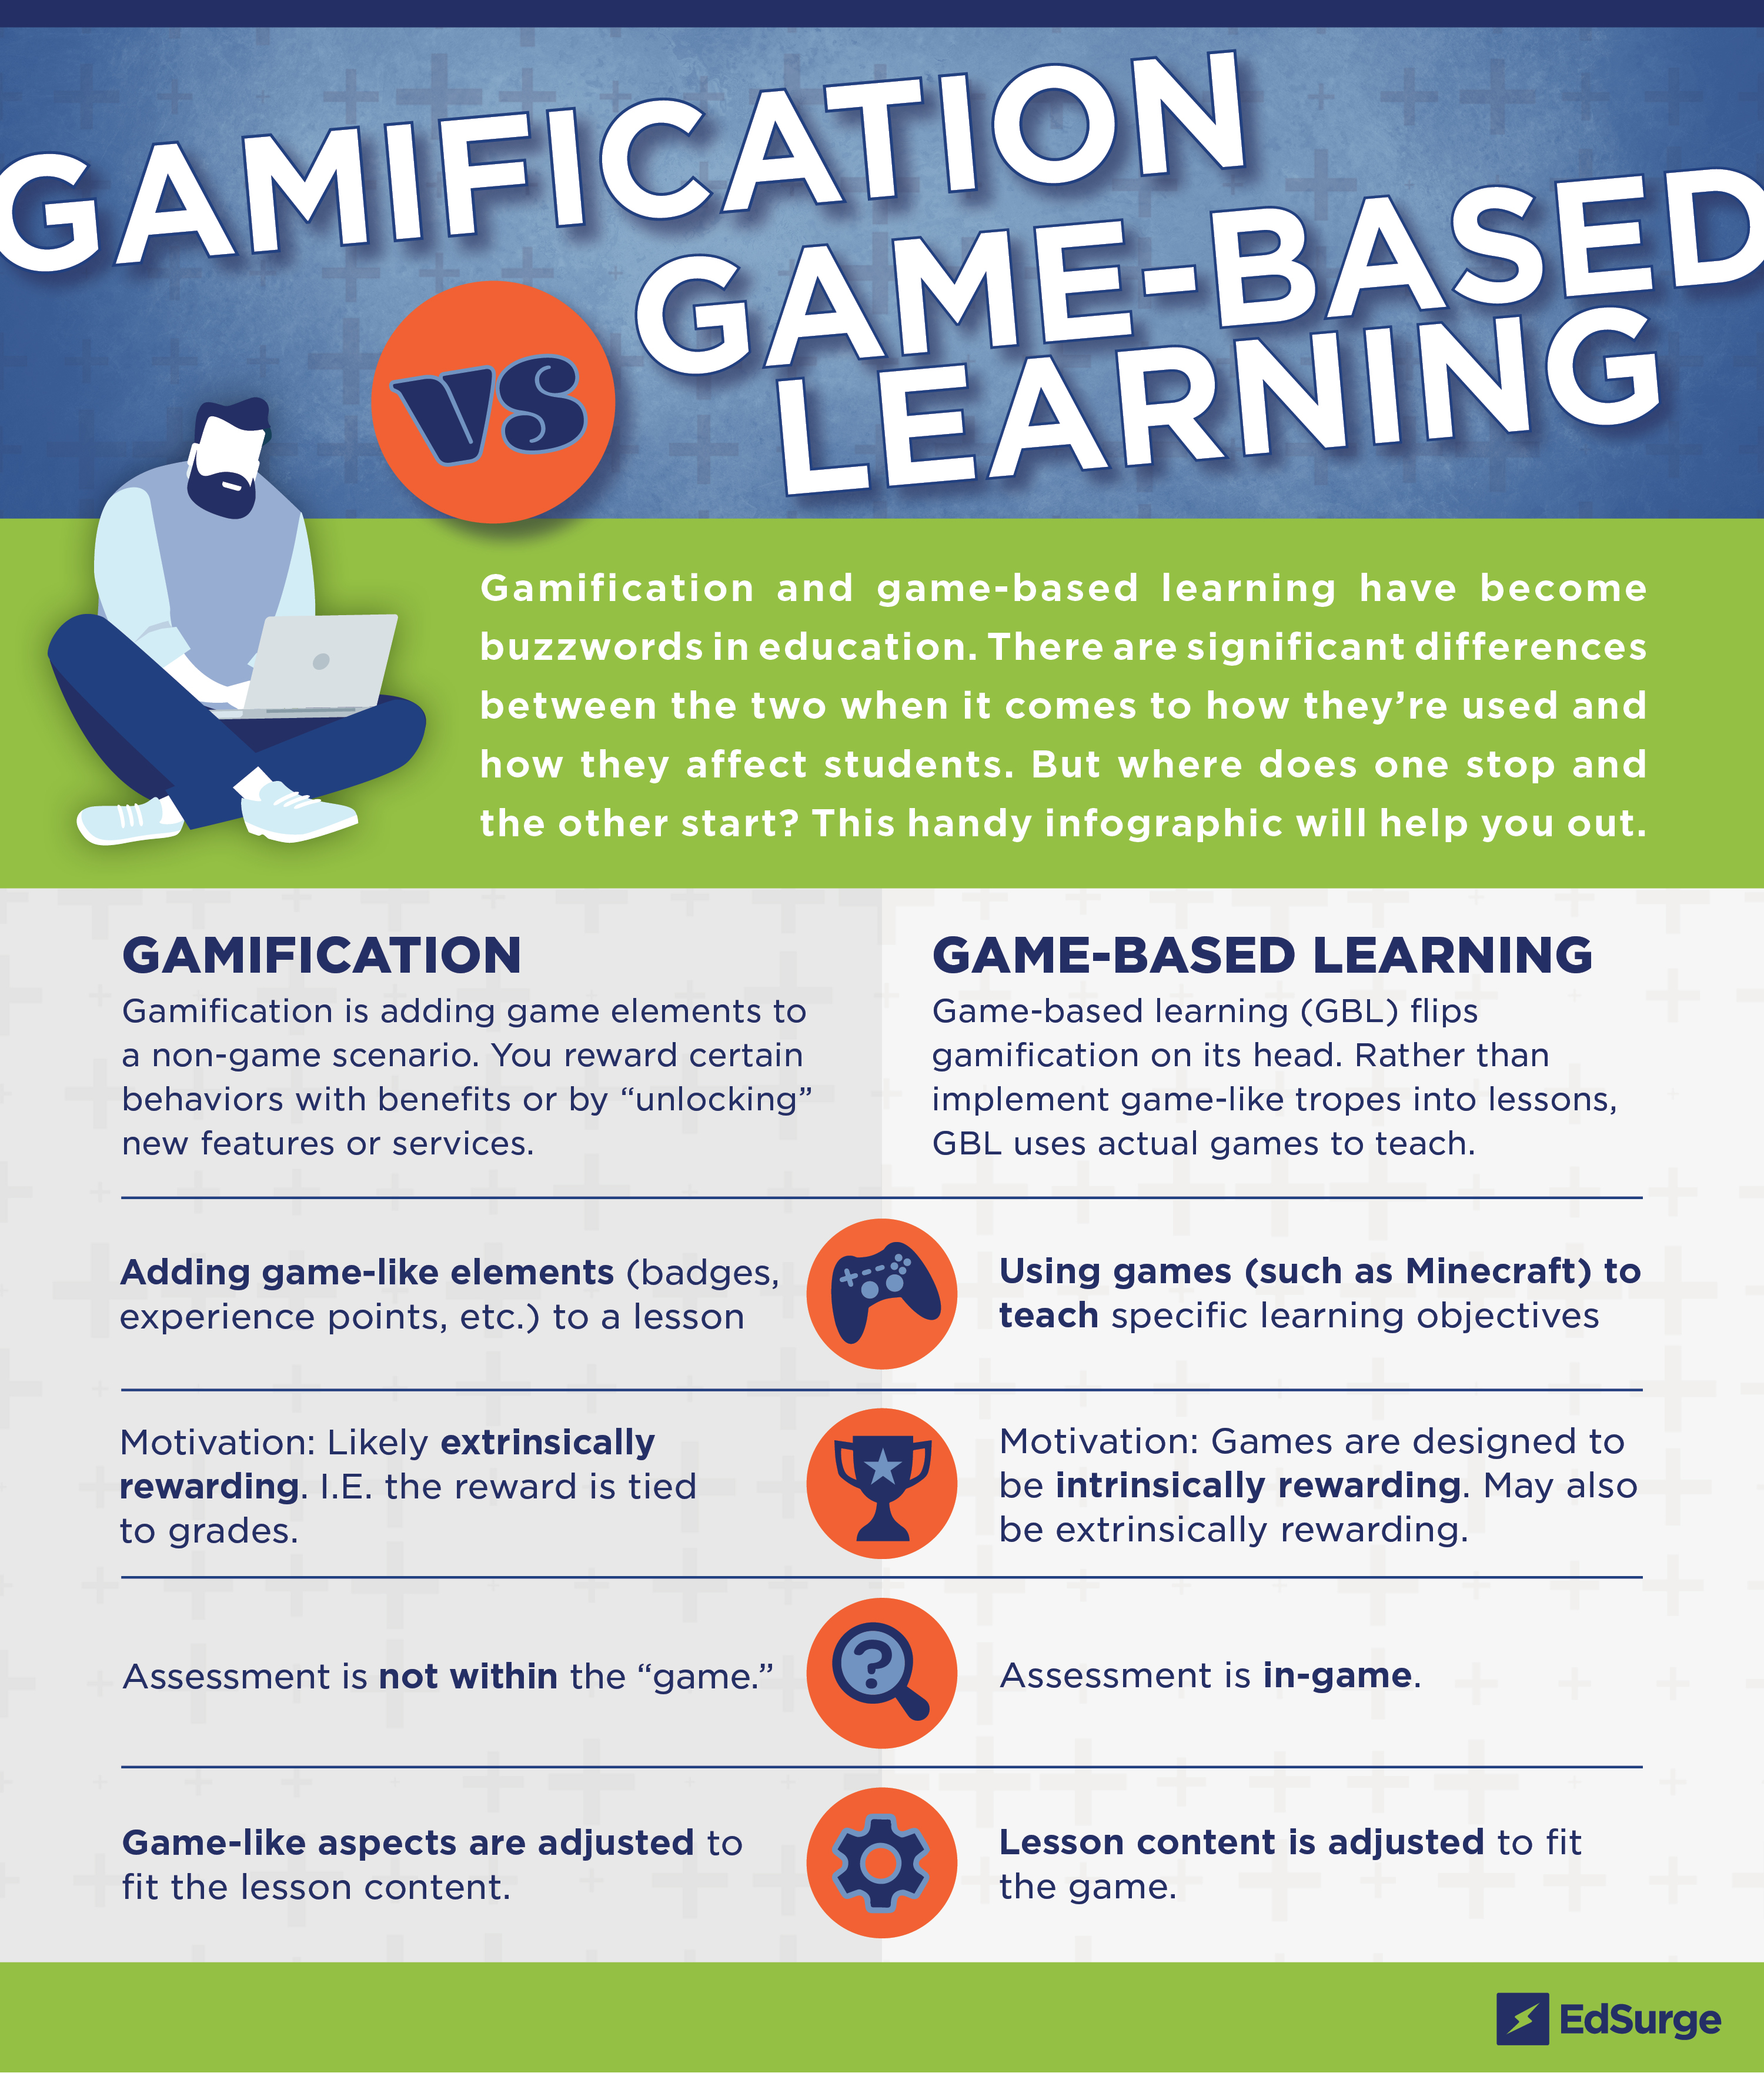 Games-Based Learning for Social Change